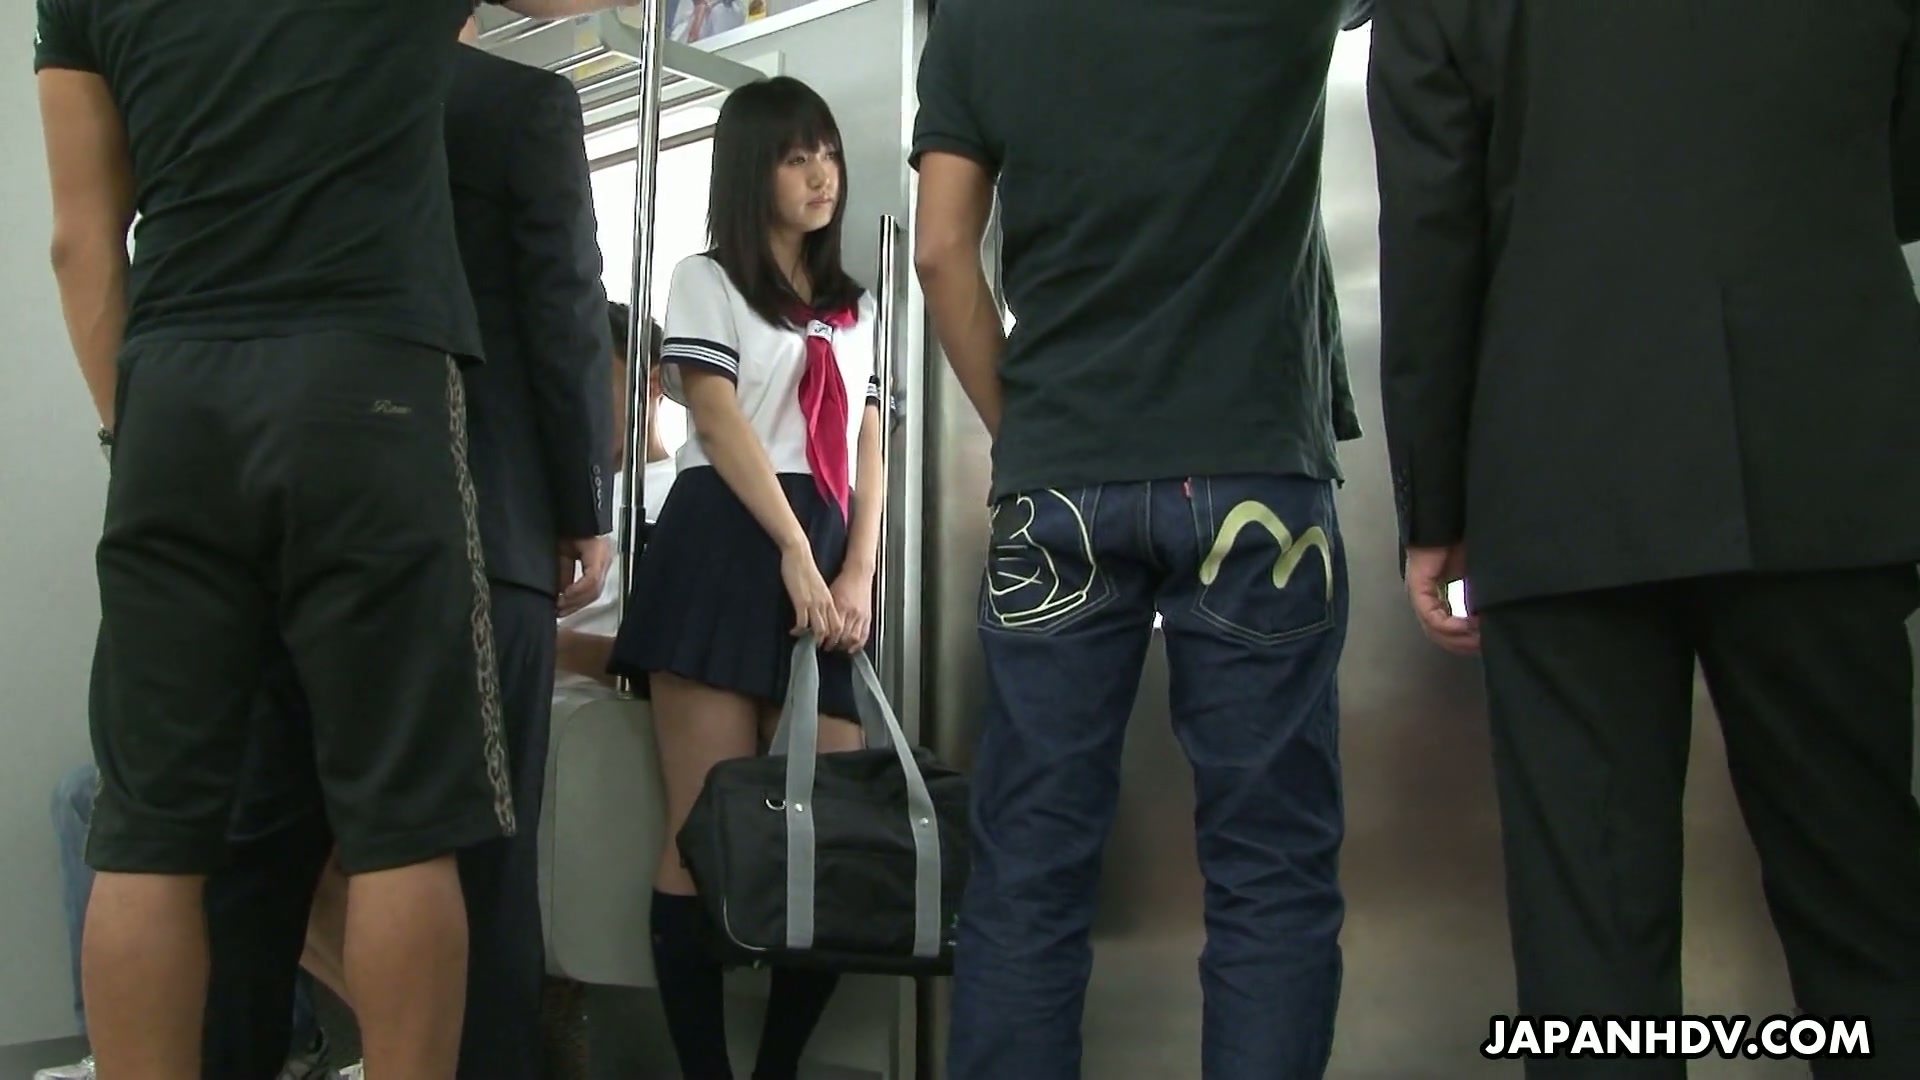 азиатку трахнули в метро видео фото 84